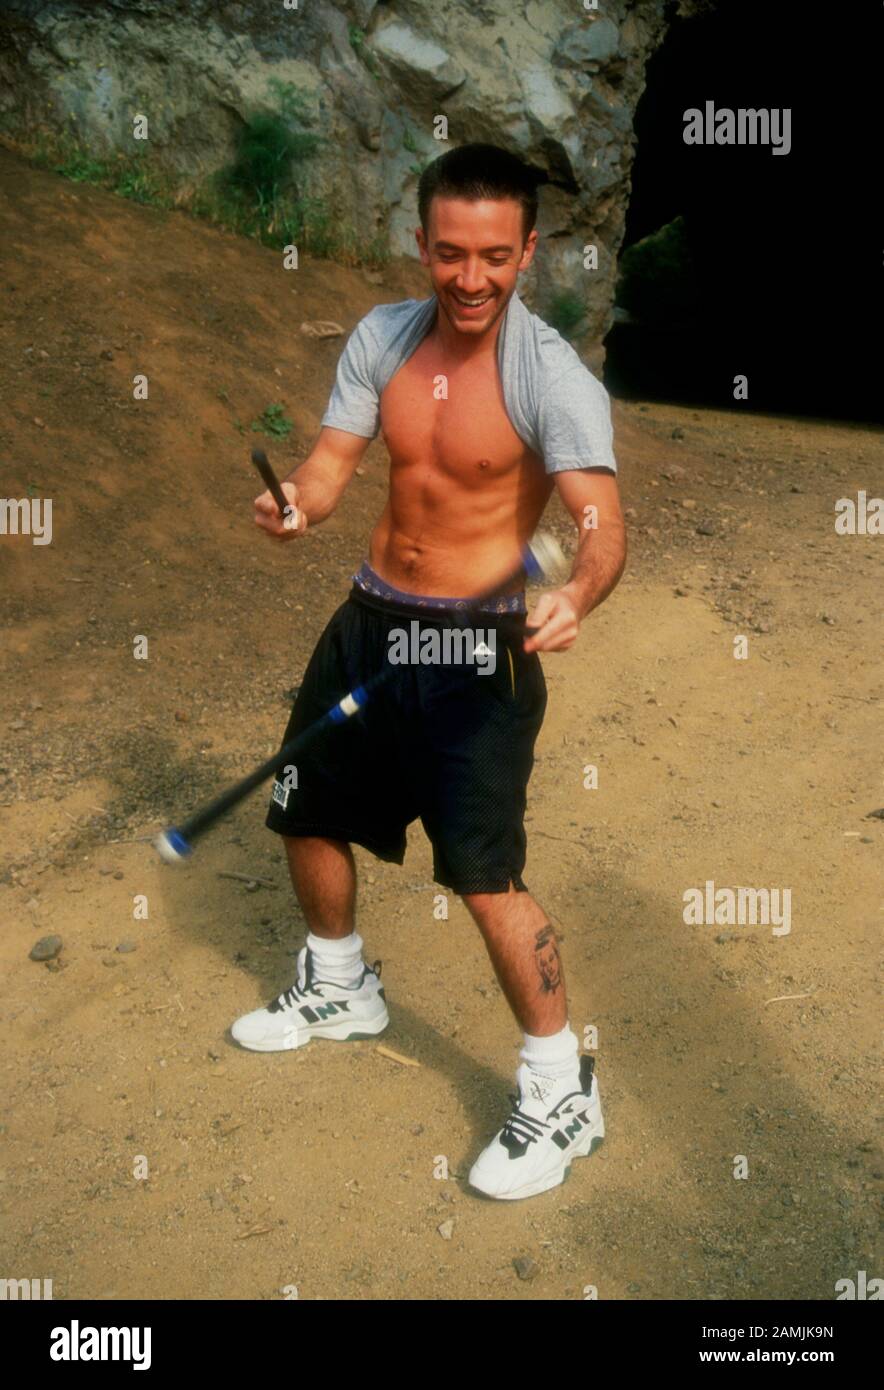 Los Angeles, California, USA 19th May 1995 (Exclusive) Actor David Faustino poses at a photo shoot on May 19, 1995 in Los Angeles, California, USA. Photo by Barry King/Alamy Stock Photo Stock Photo